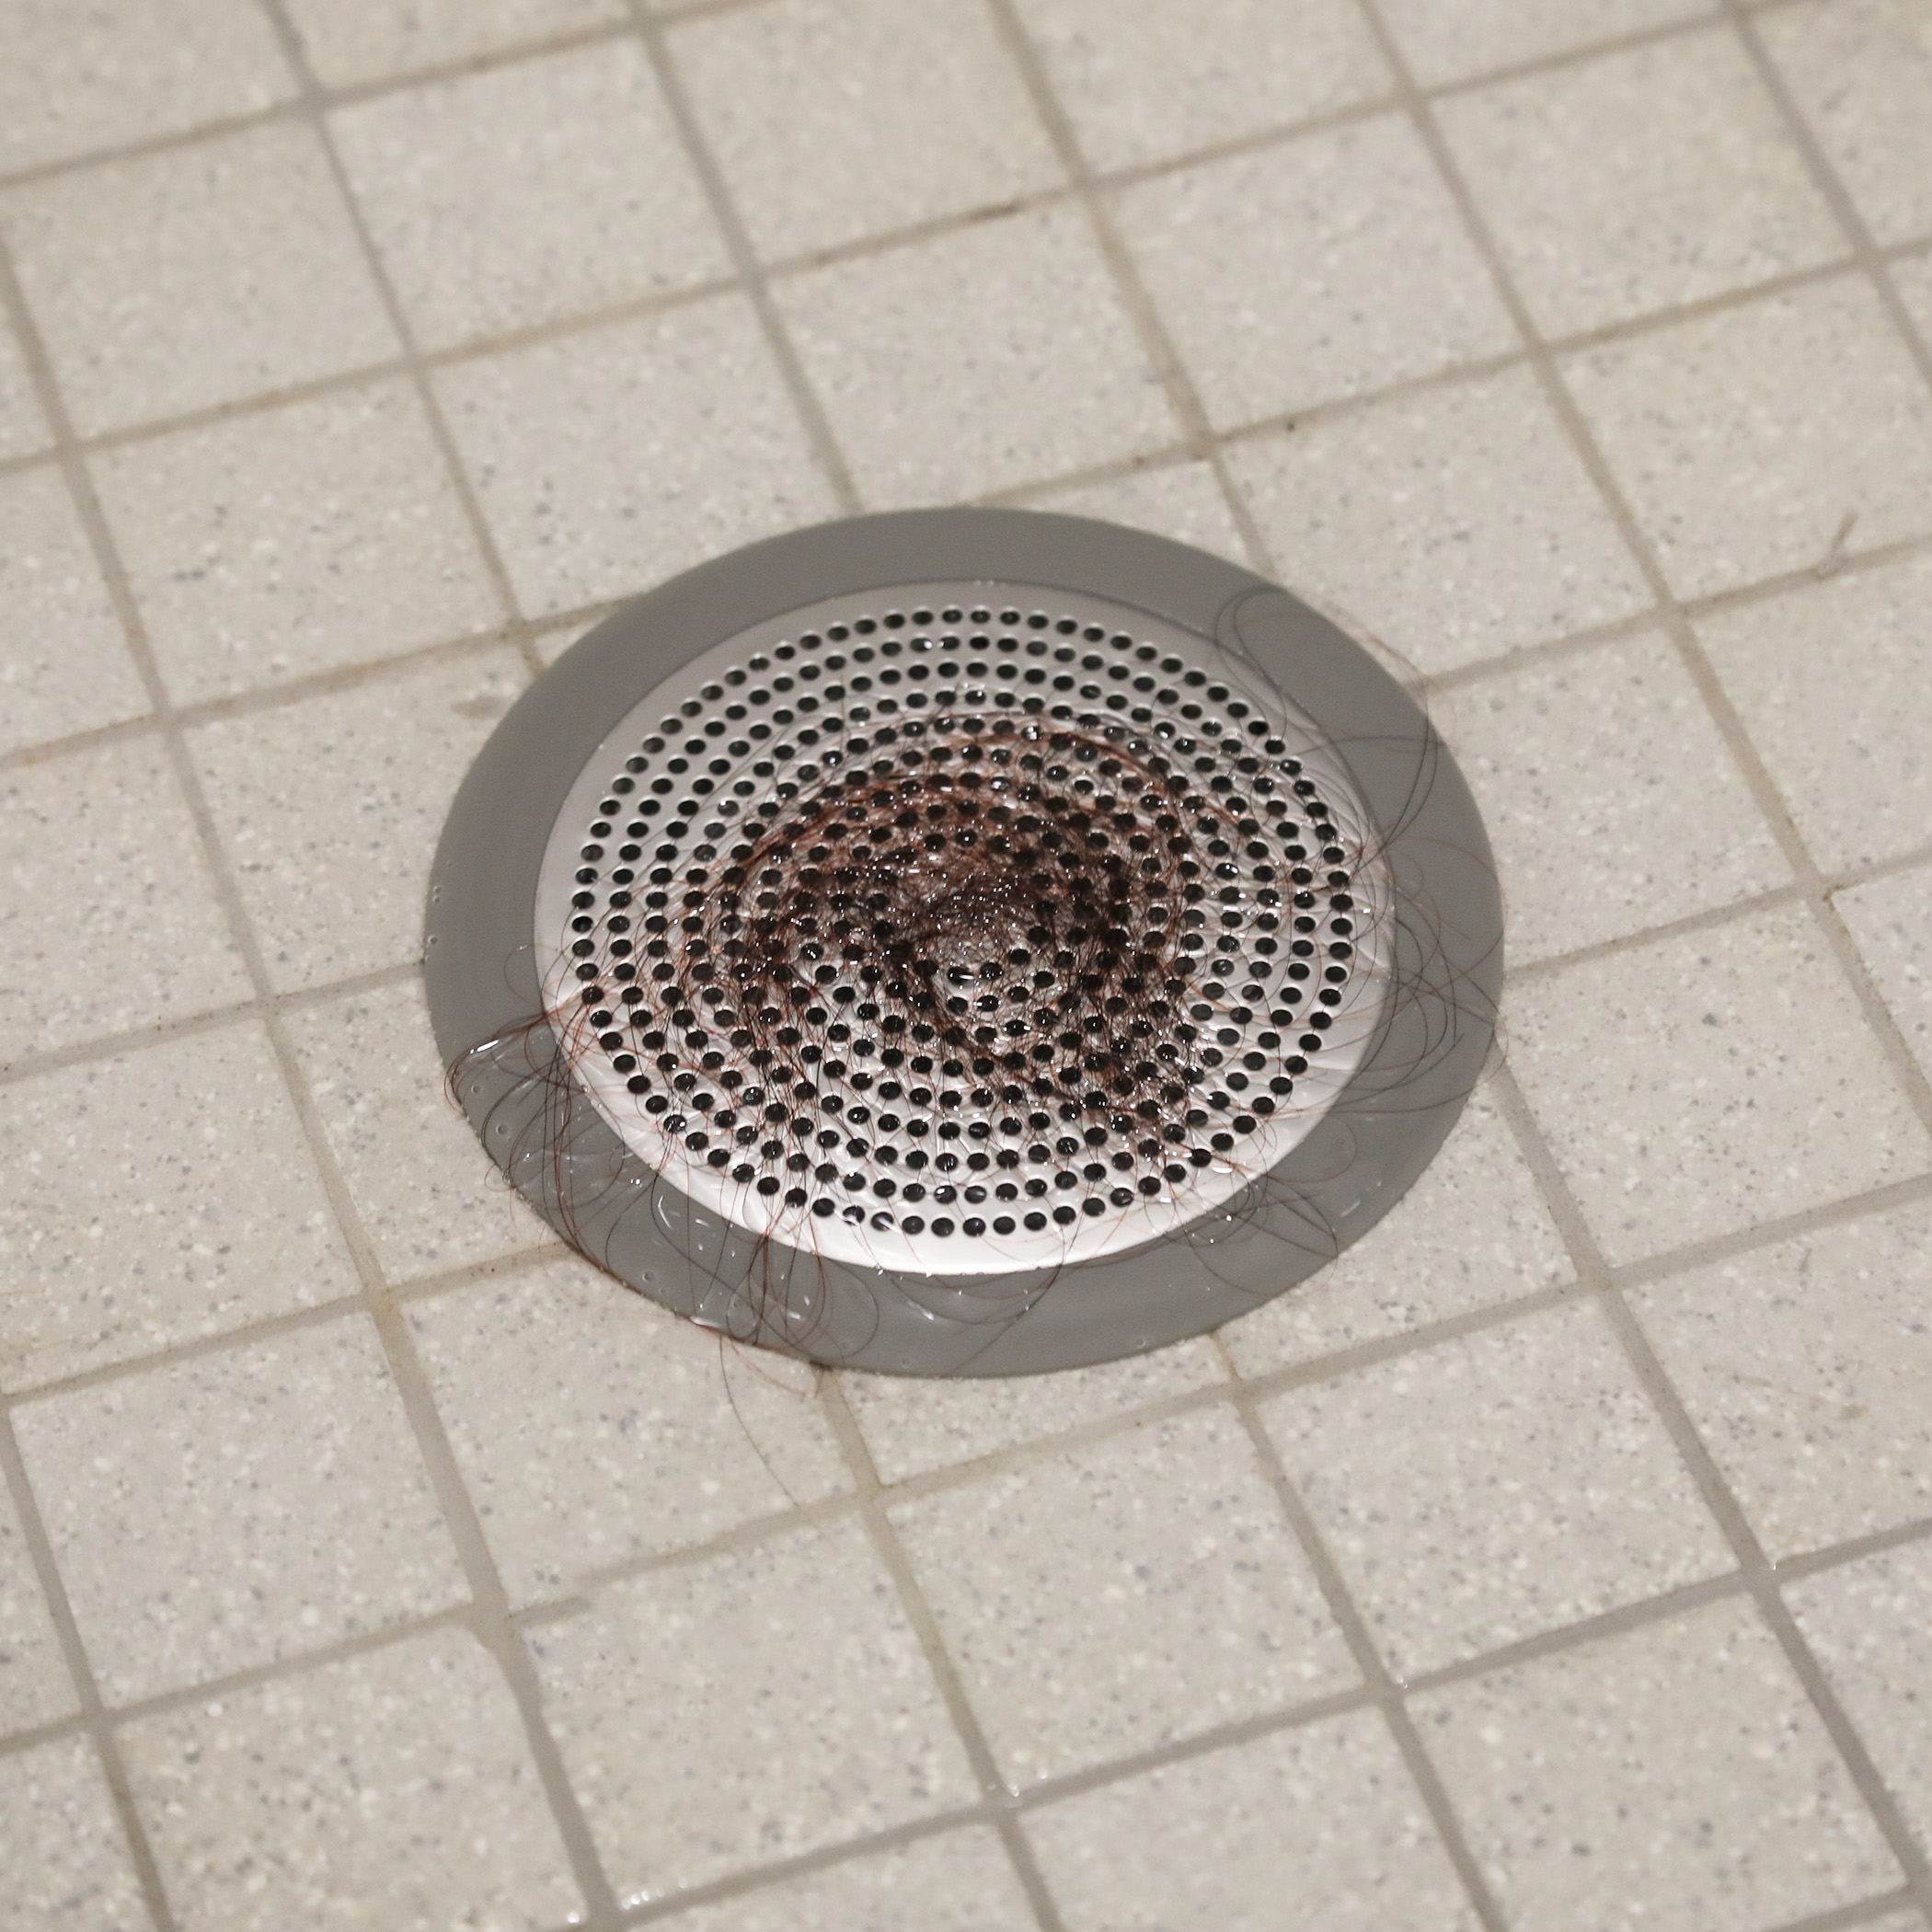 DANCO Rust-Resistant Shower Drain Strainer, Brushed Nickel, 2-15/15-Inch,  1-Set (89269) - Faucet Trim Kits 